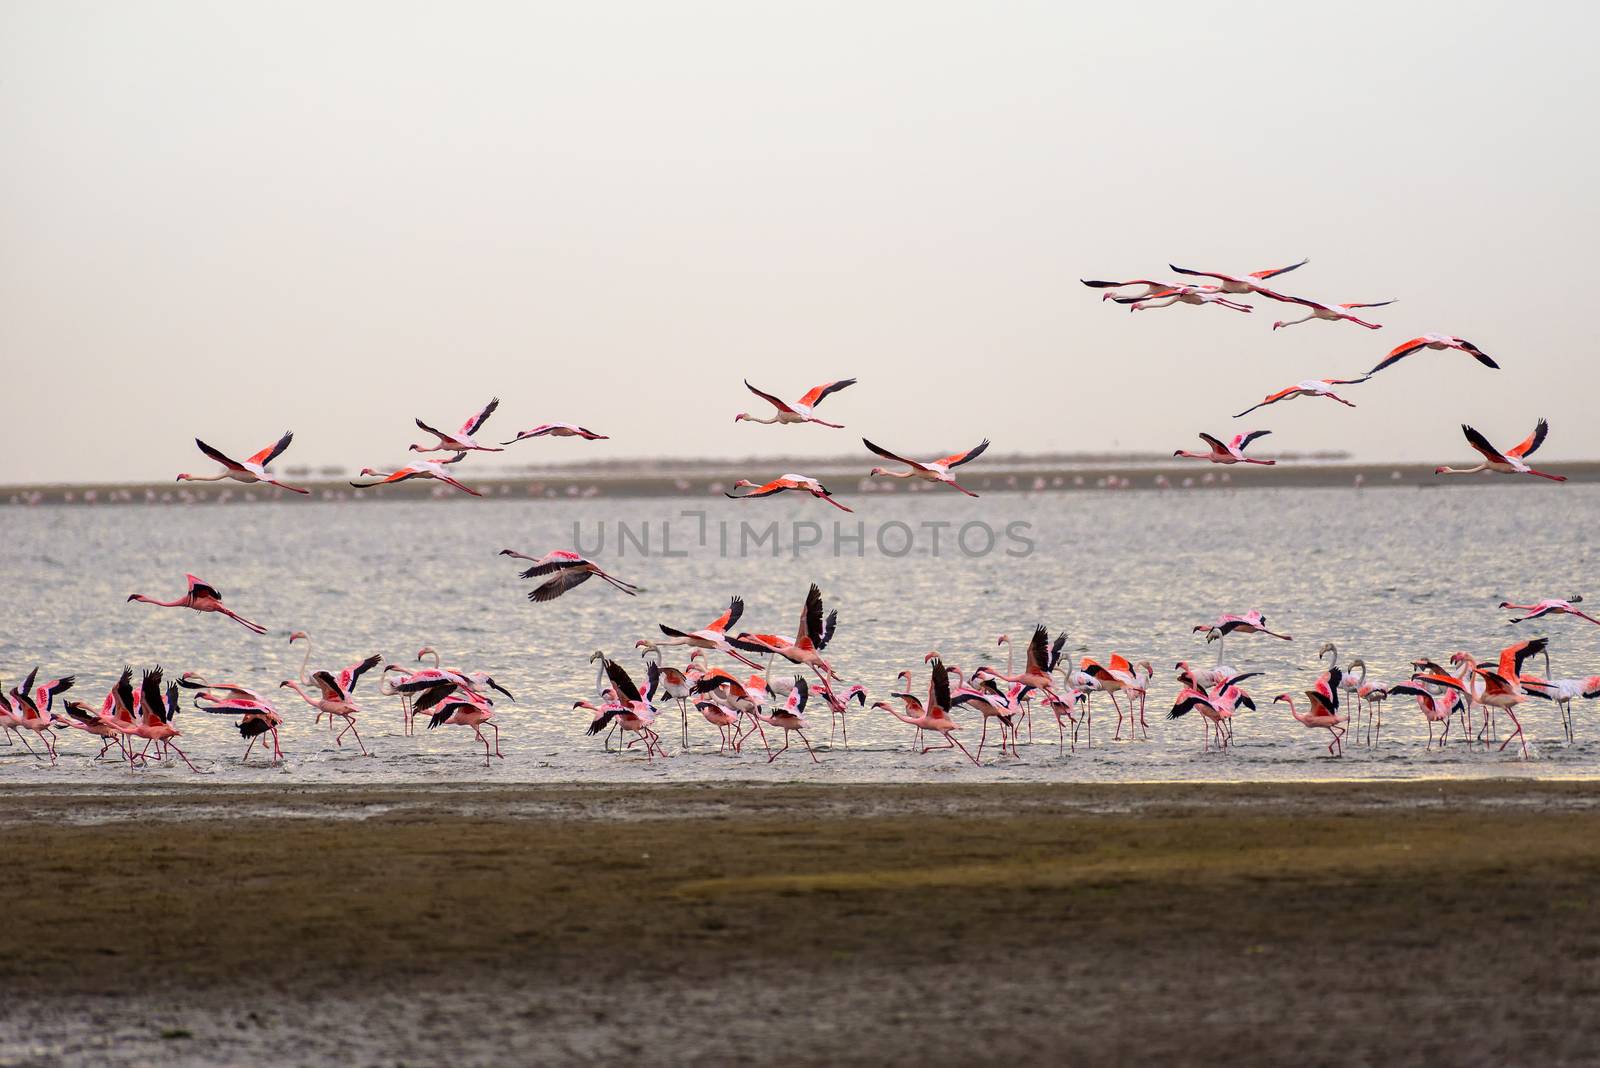 Large flock of pink flamingos in flight at Walvis Bay, Namibia by nickfox